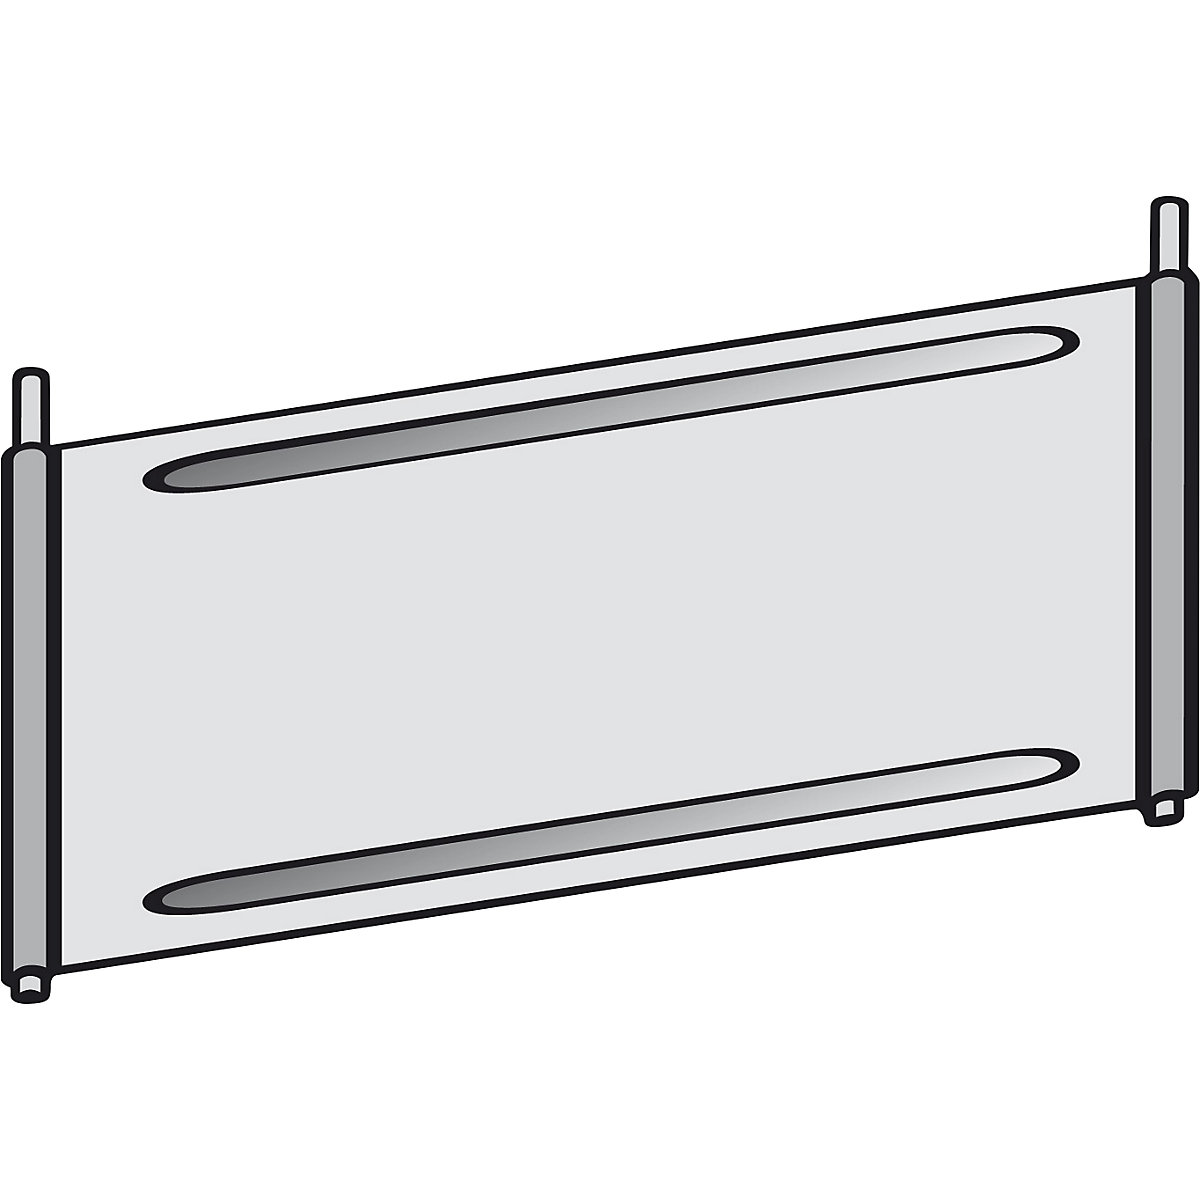 Chapa separadora para estante de compartimentos - hofe